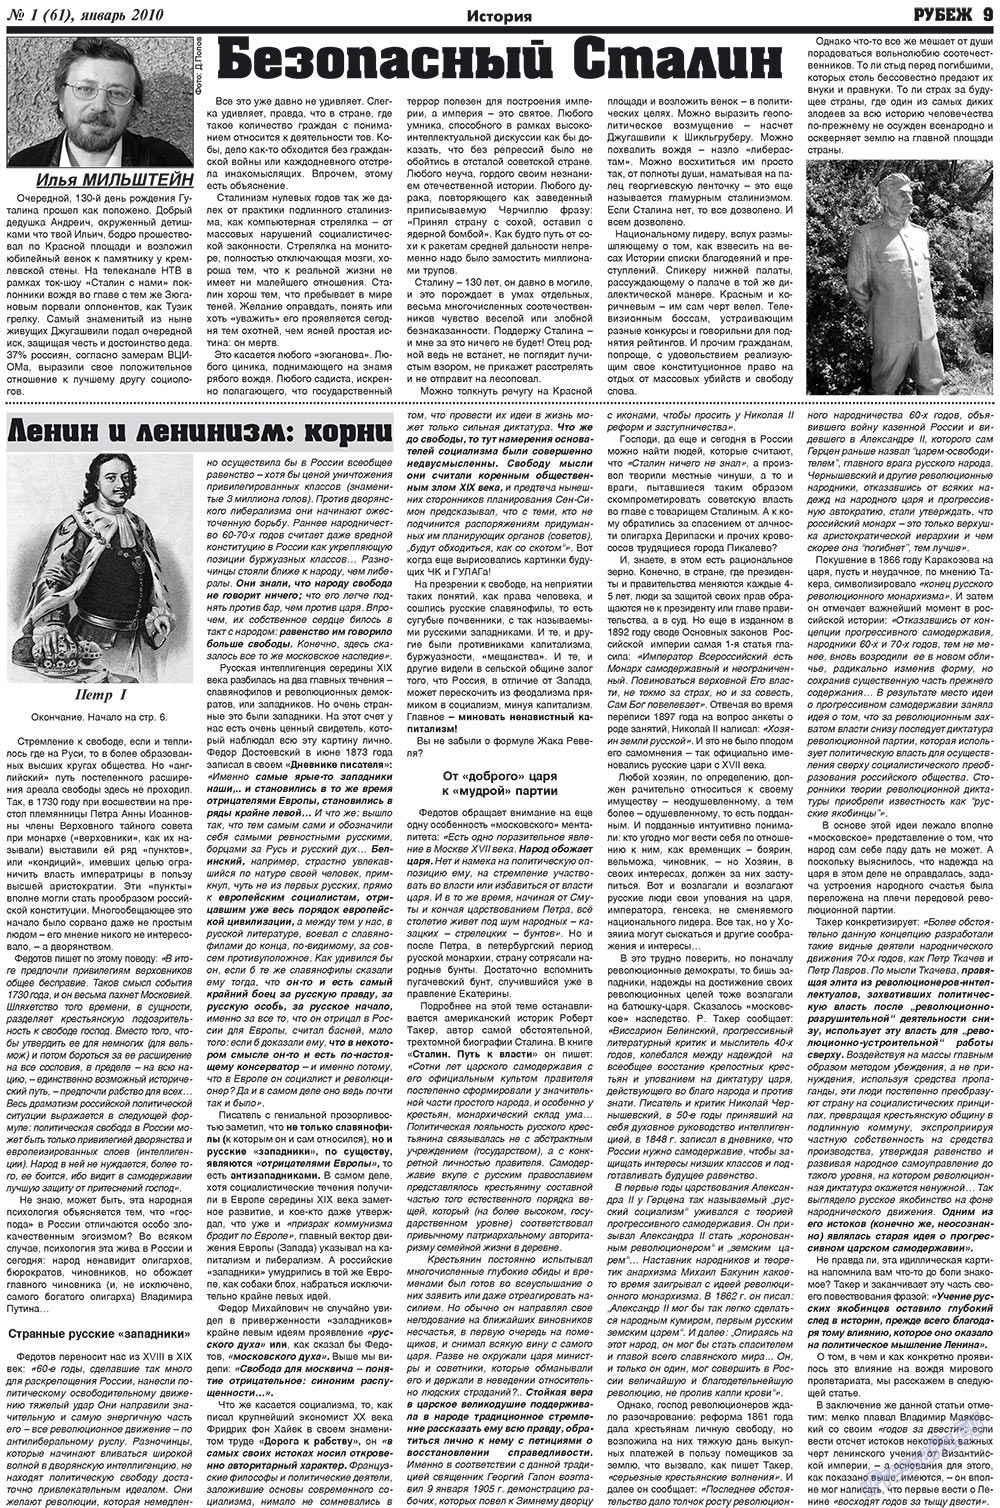 Рубеж, газета. 2010 №1 стр.9